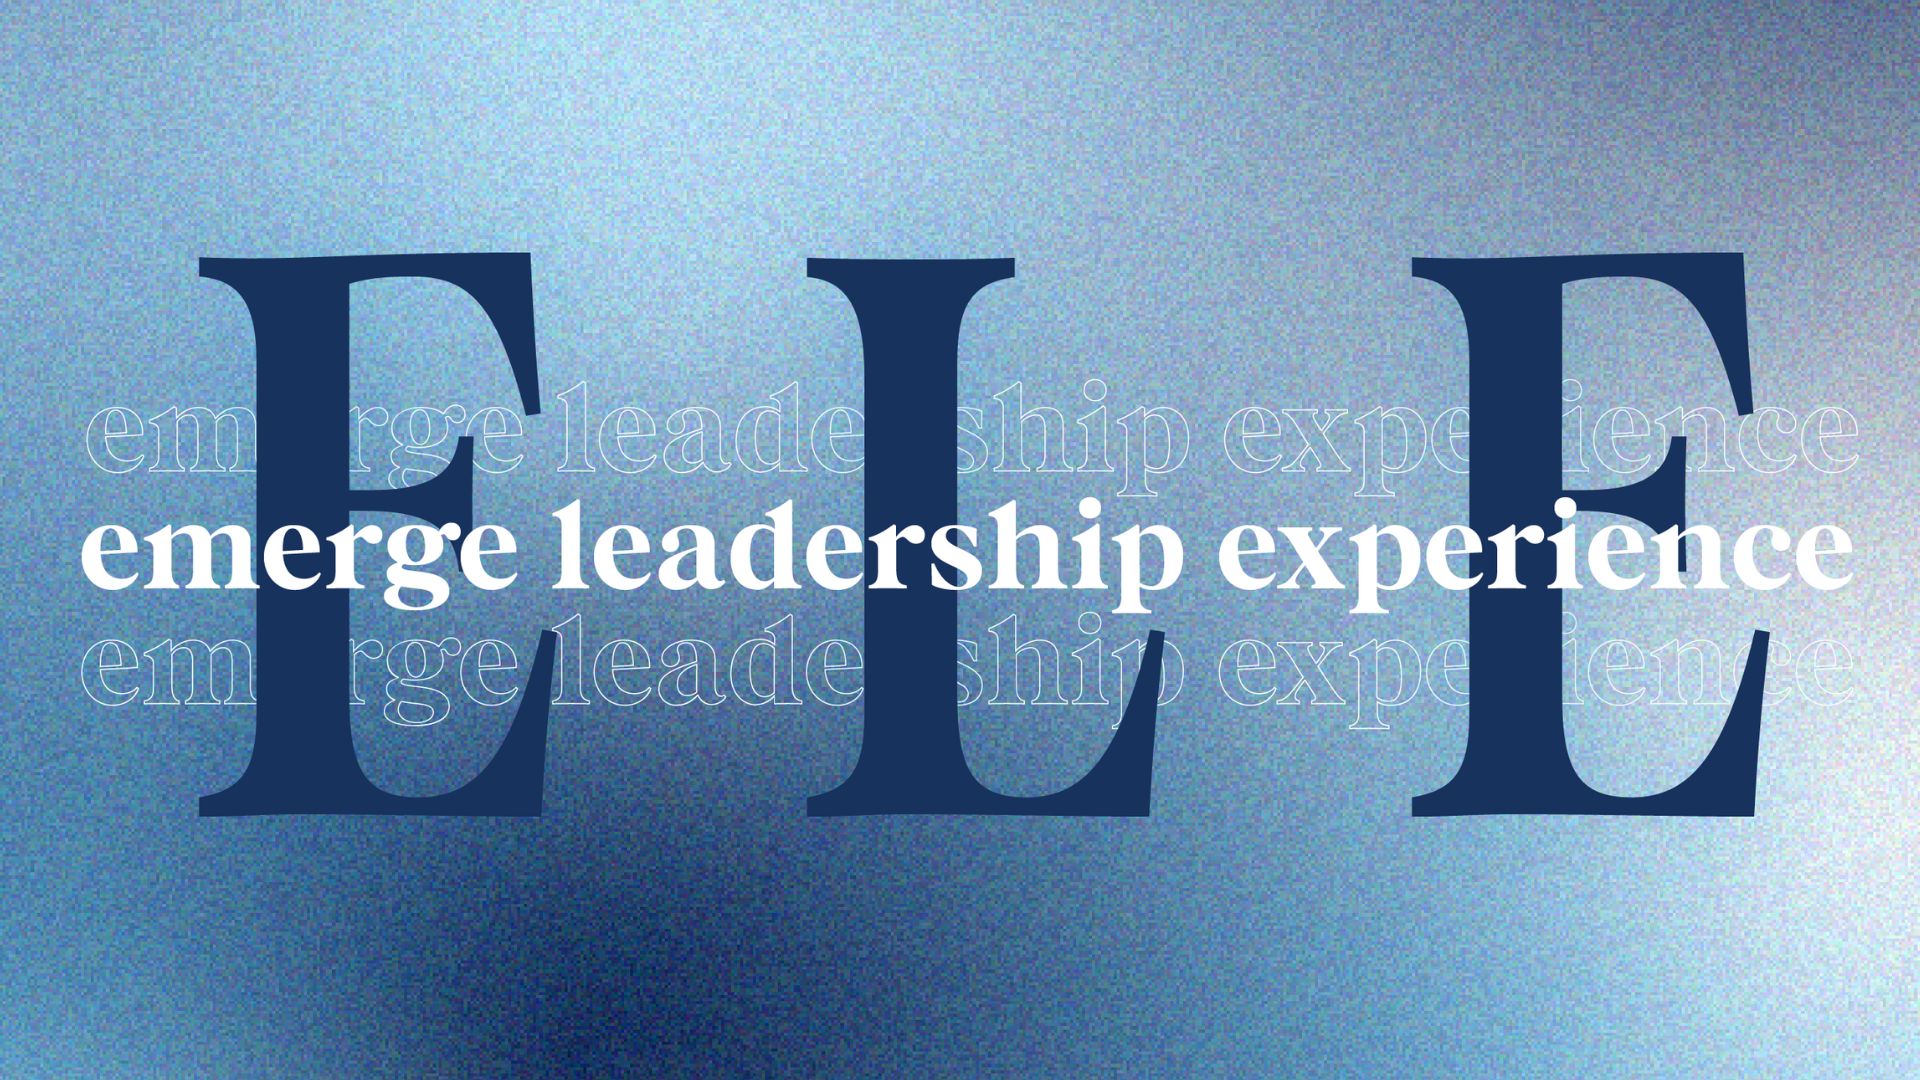 Emerge Leadership Experience Promo